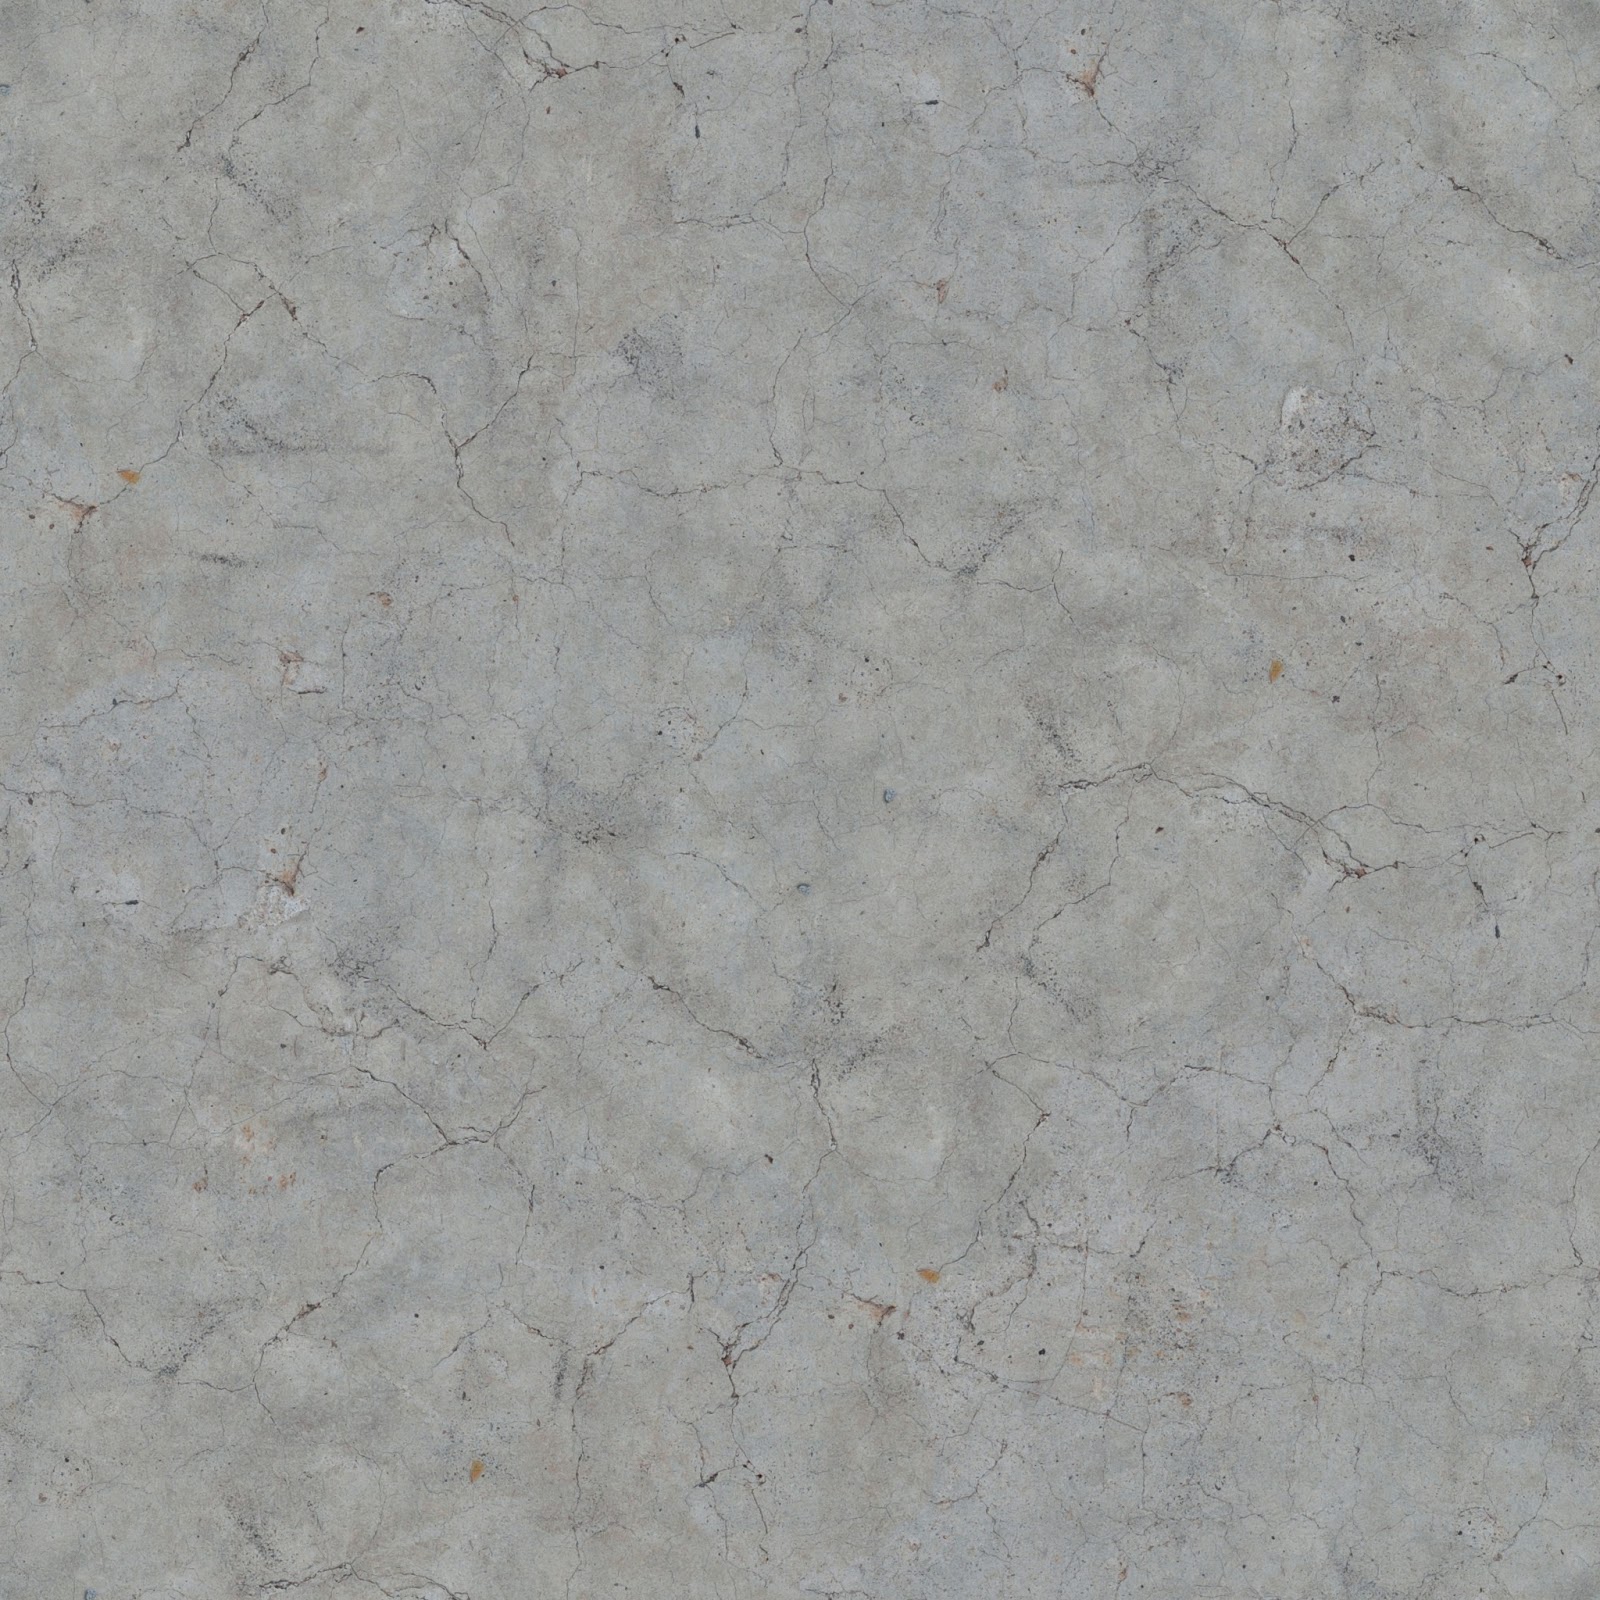 High Resolution Seamless Textures: Concrete